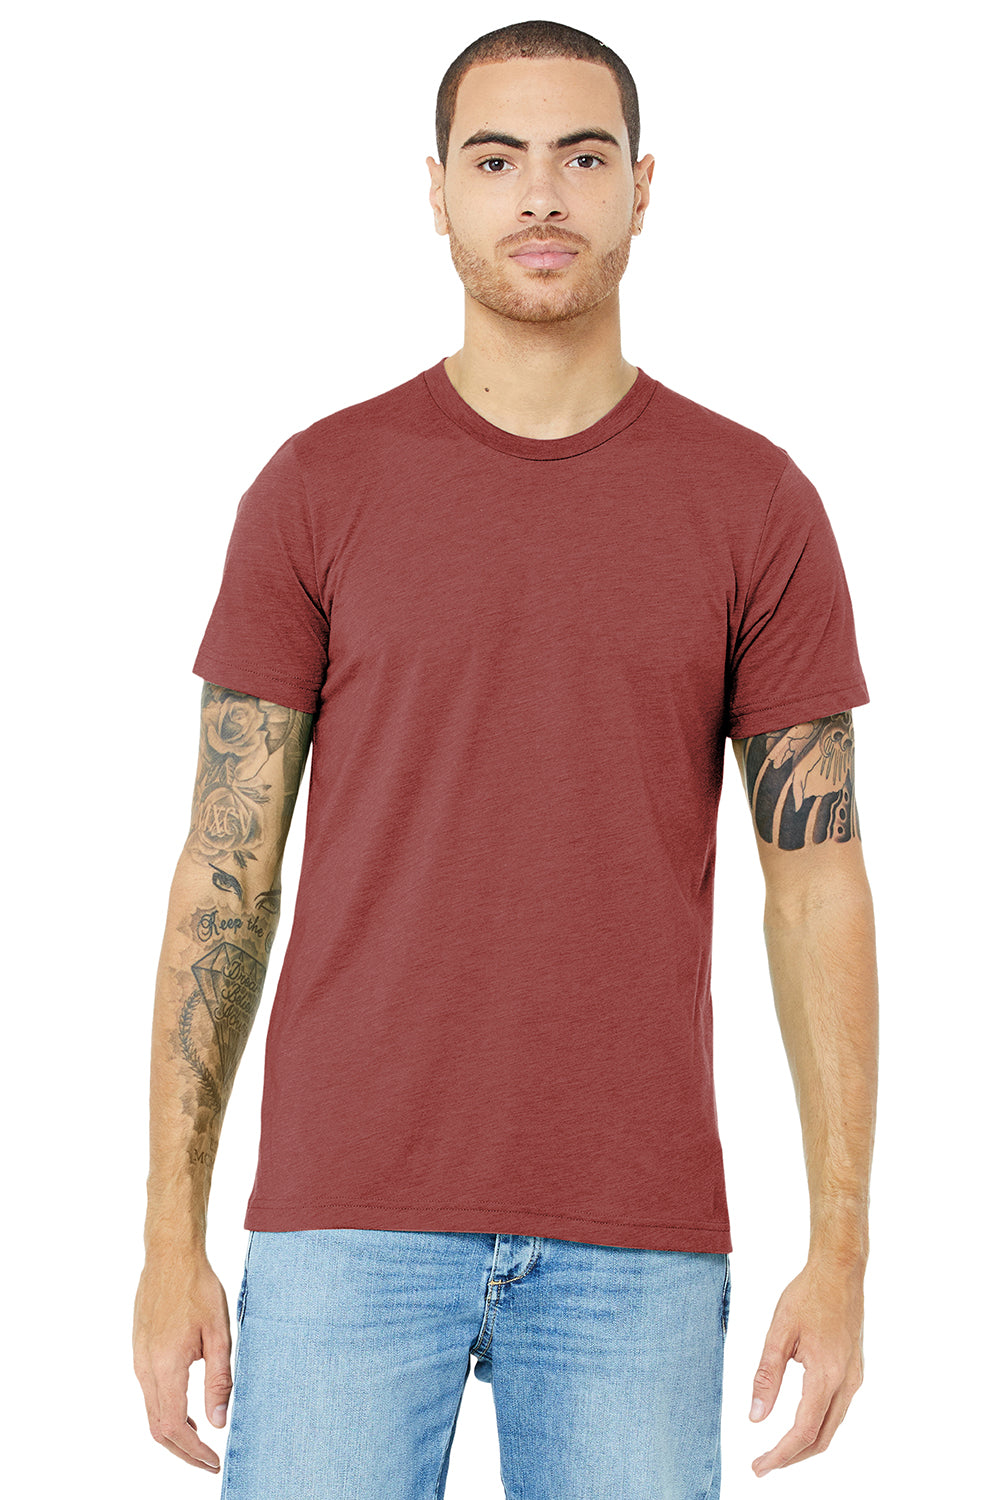 Bella + Canvas BC3413/3413C/3413 Mens Short Sleeve Crewneck T-Shirt Clay Red Model Front